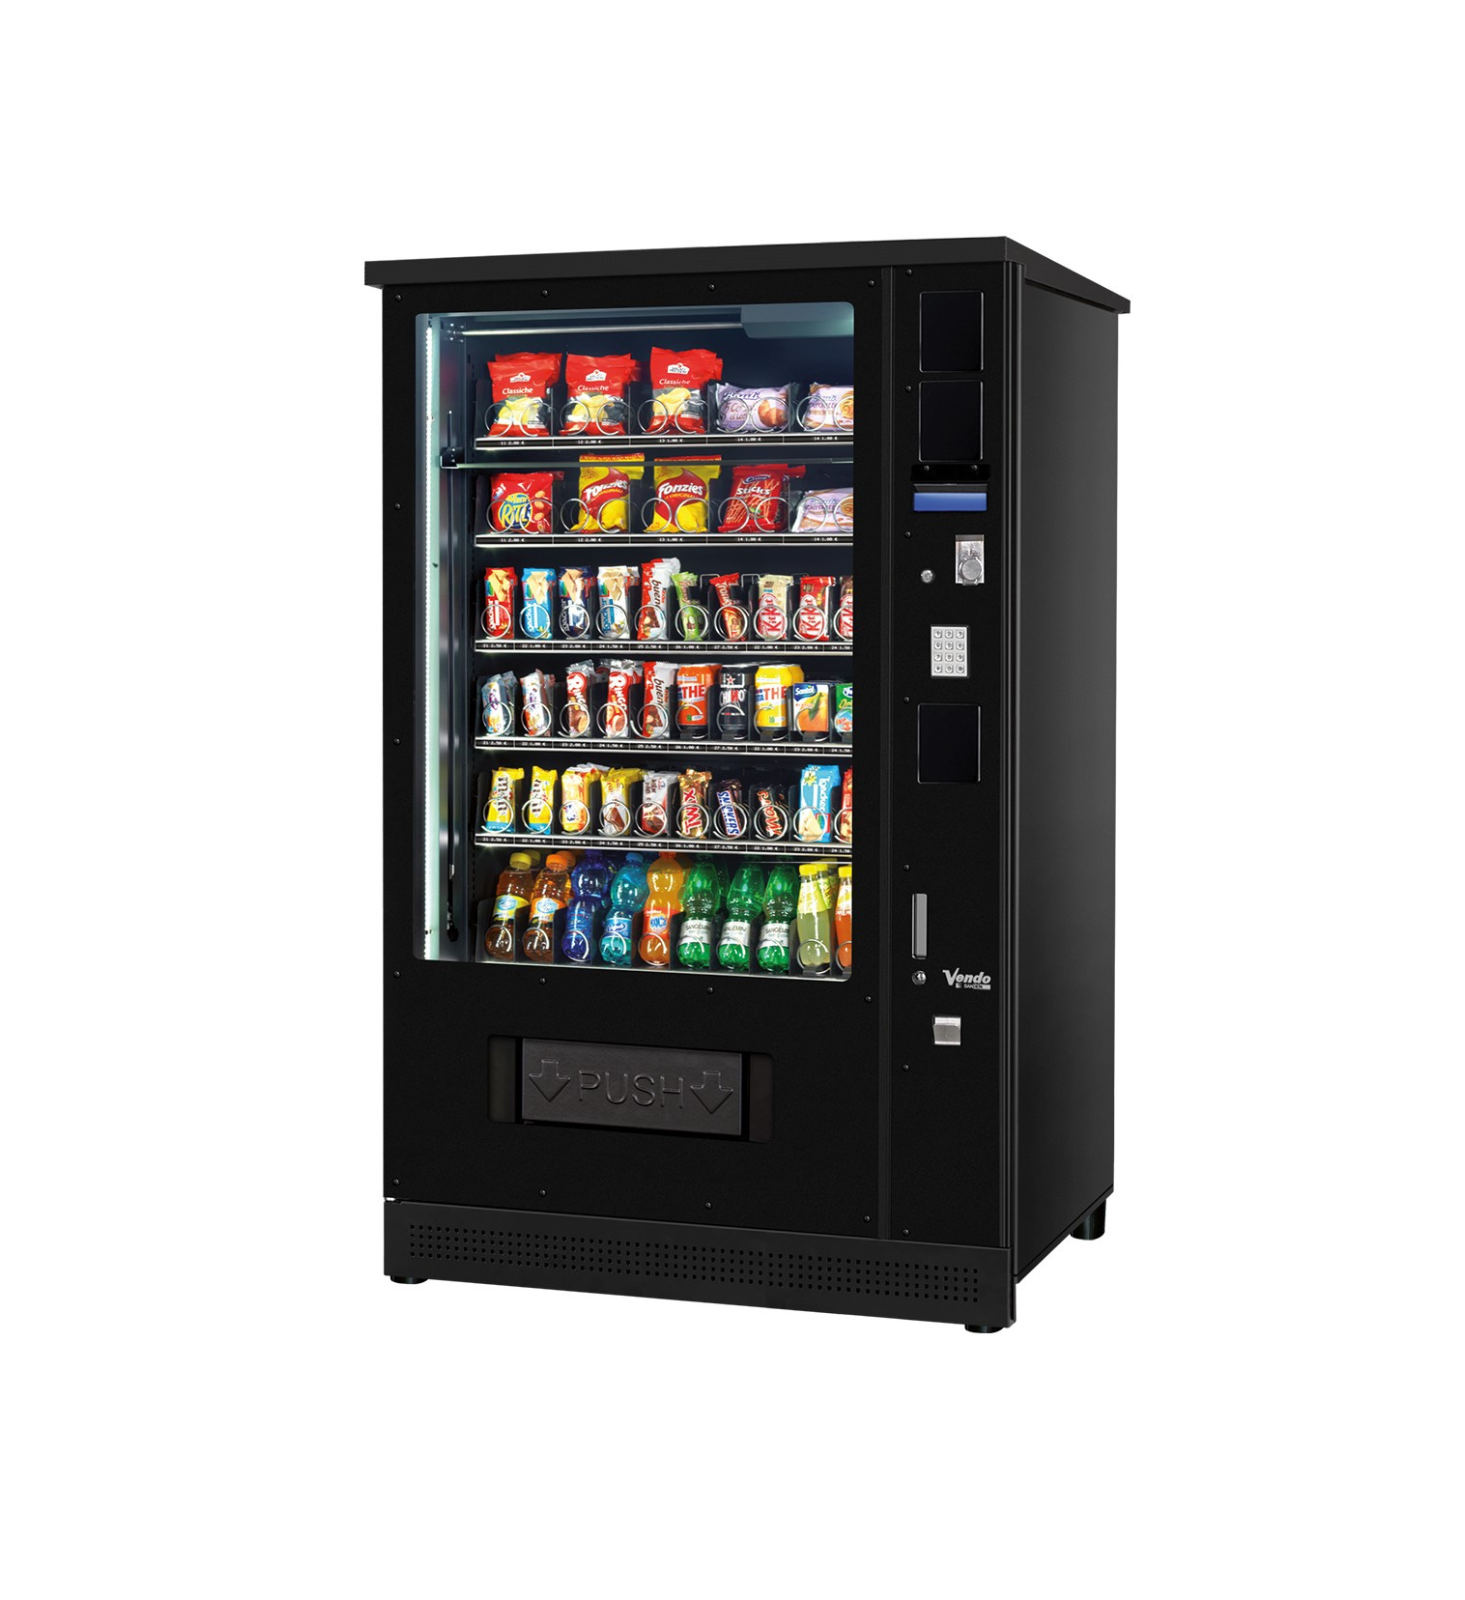 Sanden Vendo G-Snack Warenautomat Verkaufsautomat Getränkeautomat Snackautomat